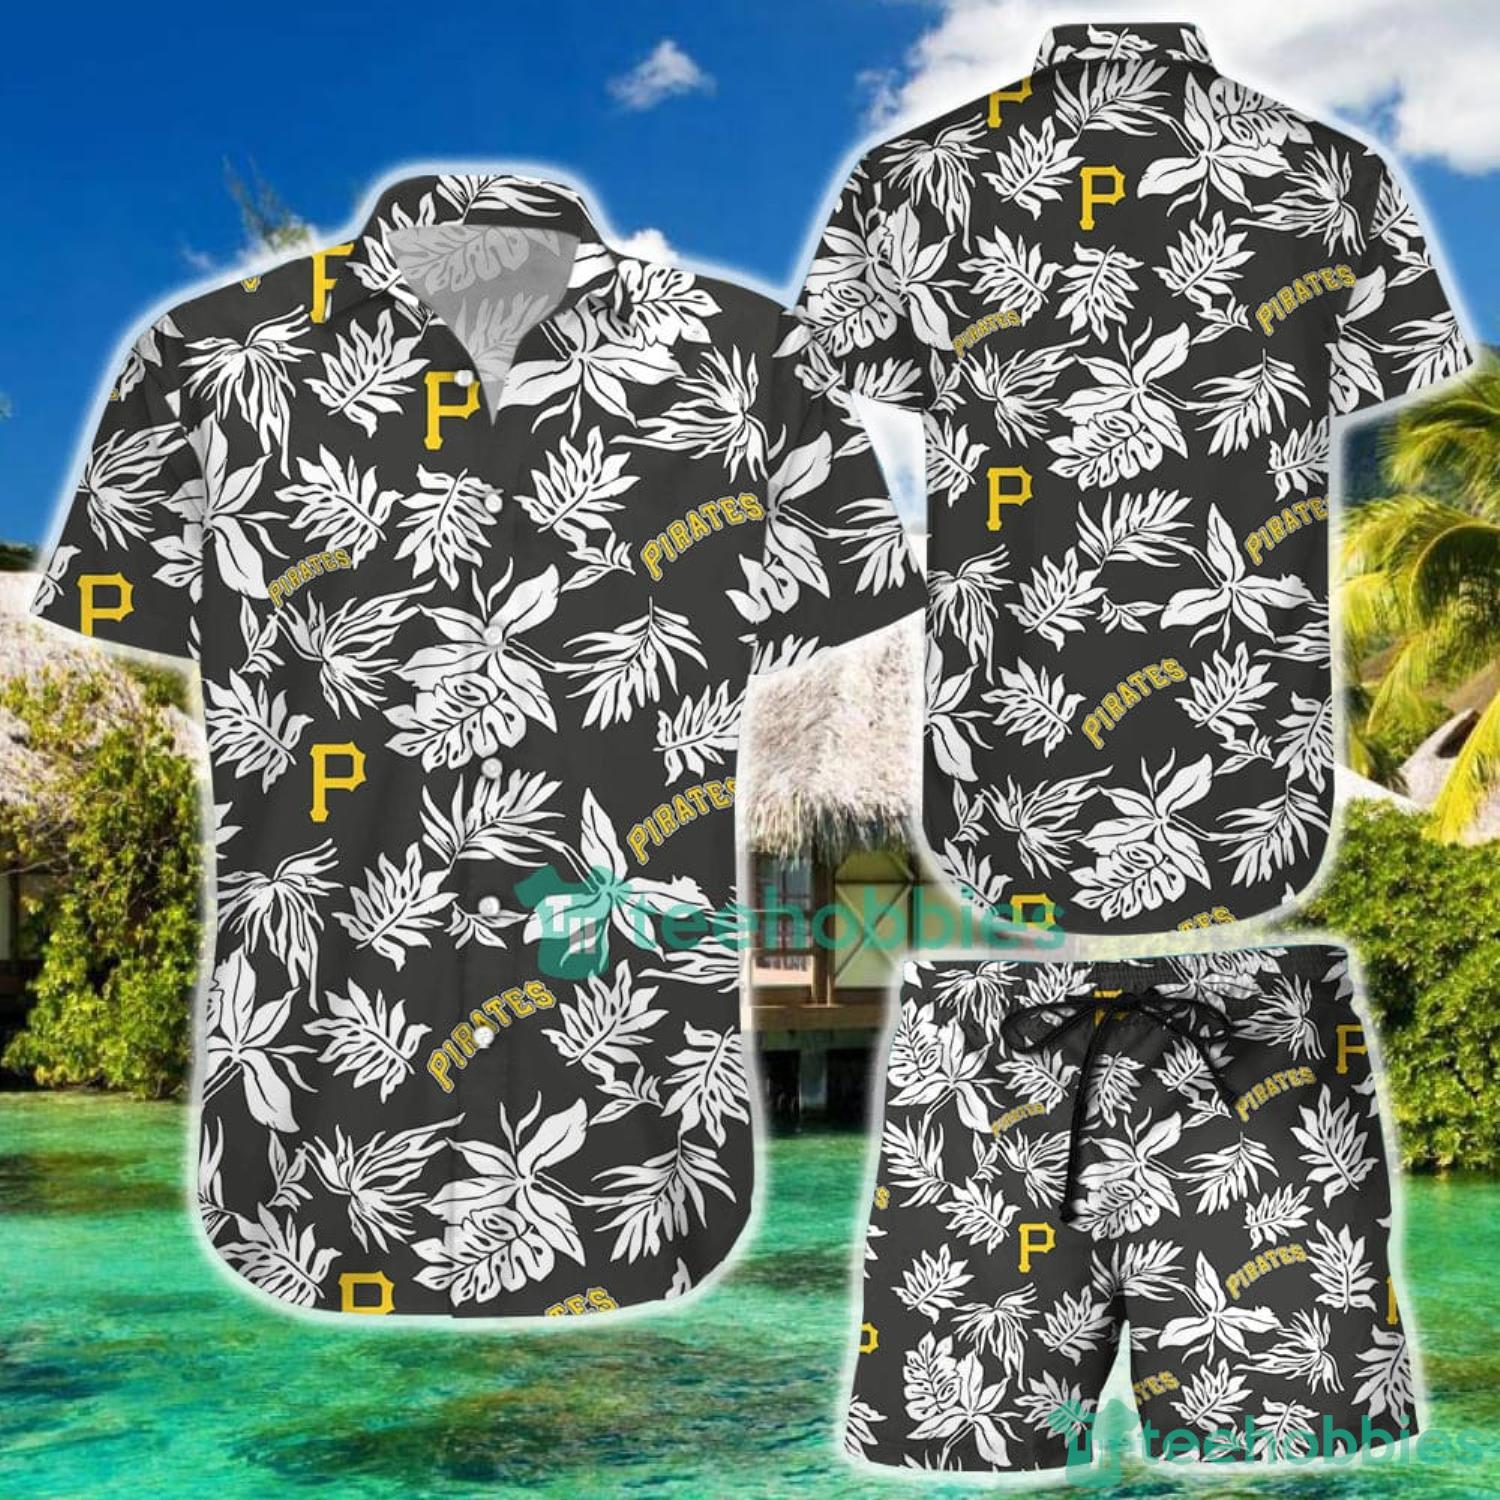 pittsburgh pirates hawaiian shirt 2022